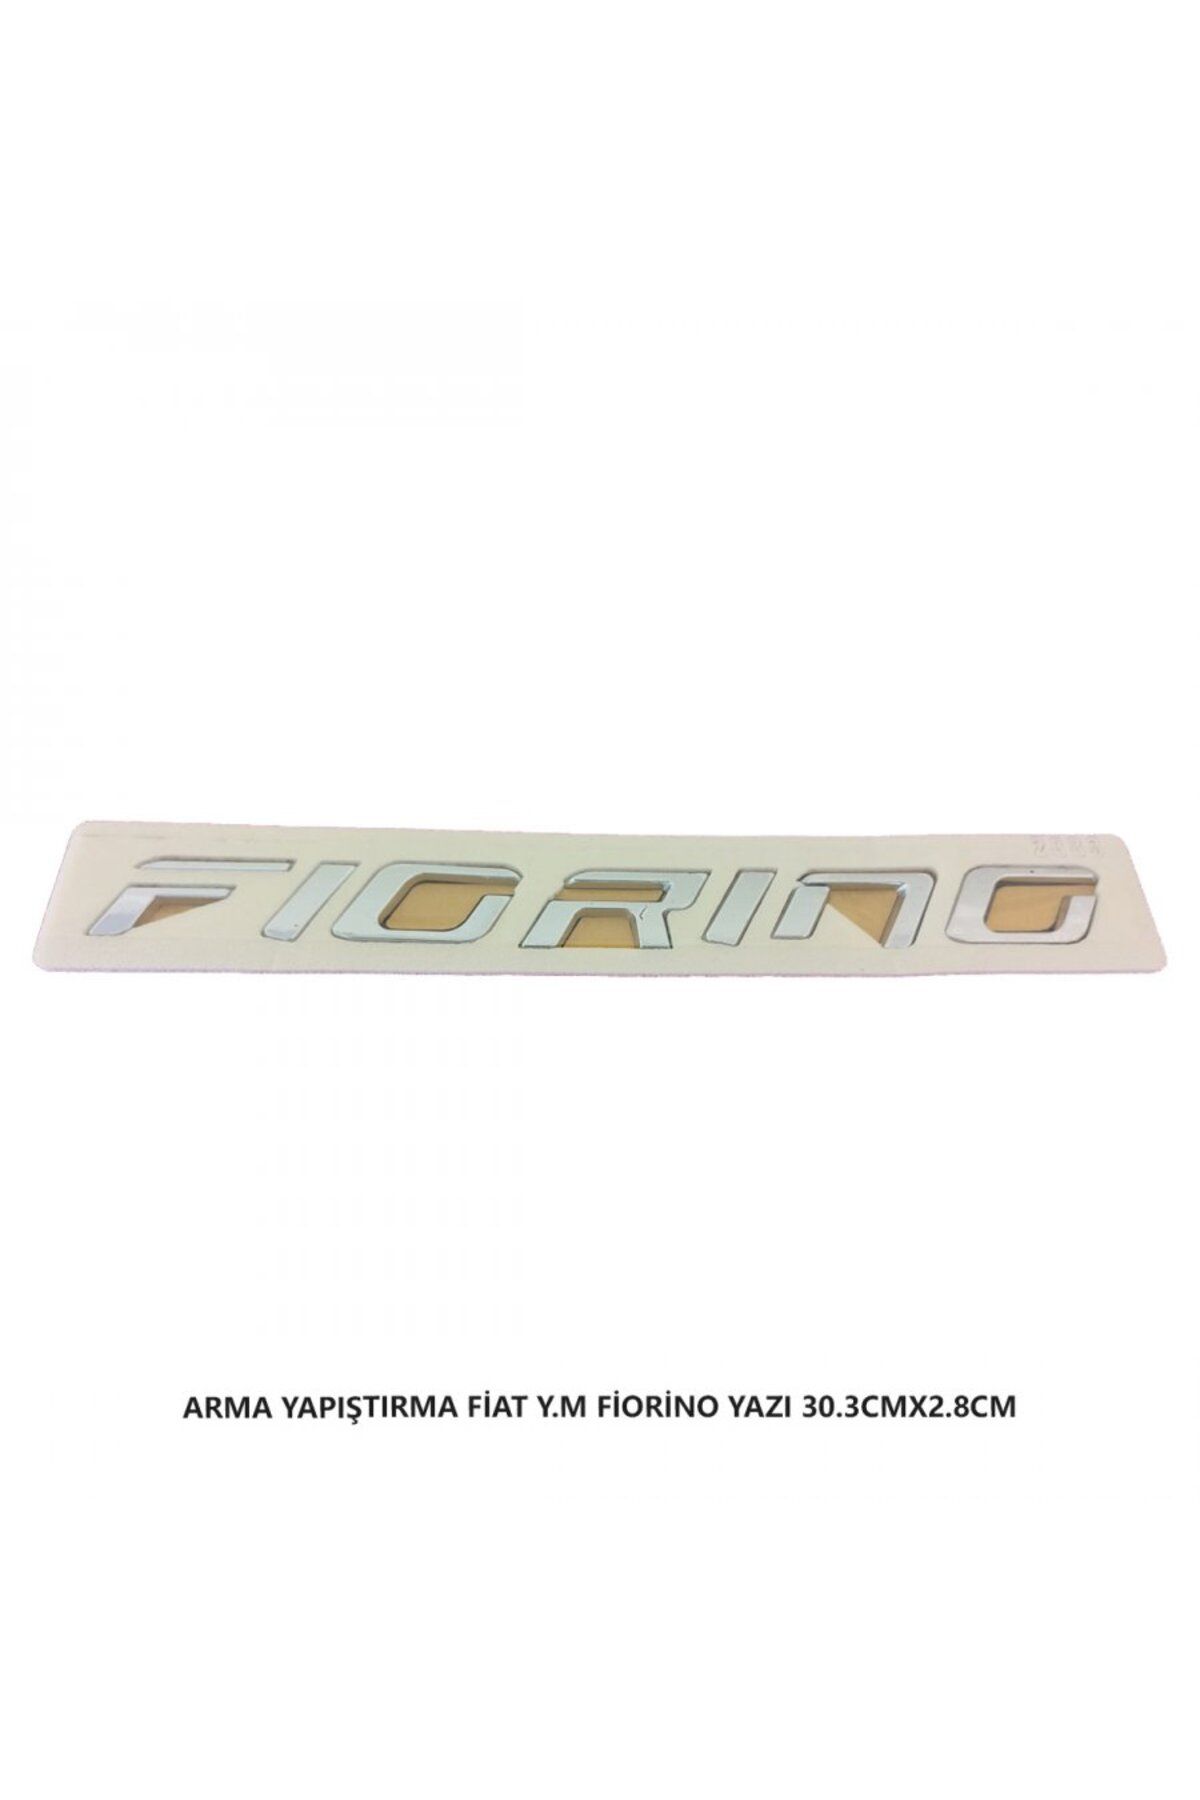 REPLAX Fiat Fiorino Arma Bagaj Yazısı (Y.M.) Yapıştırma 30.3cmx2.8cm 2883